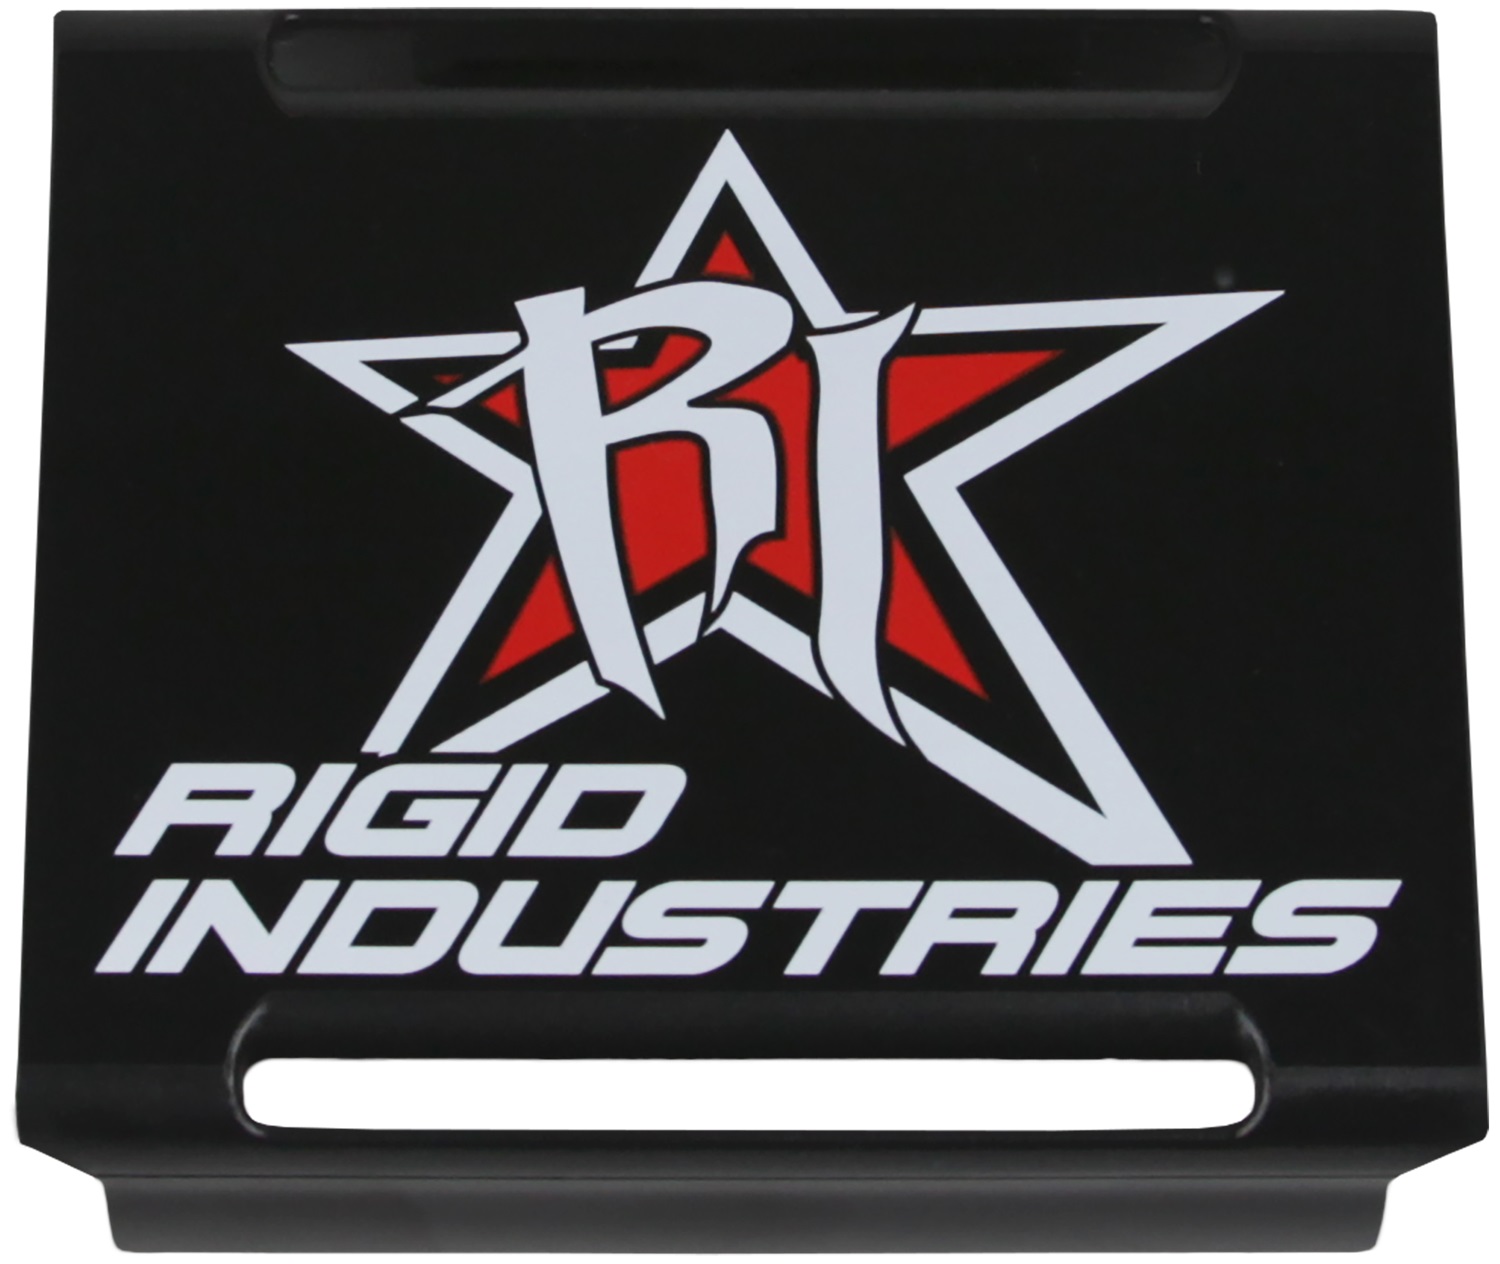 Rigid Industries Rigid Industries 10491 EM Series; Light Cover